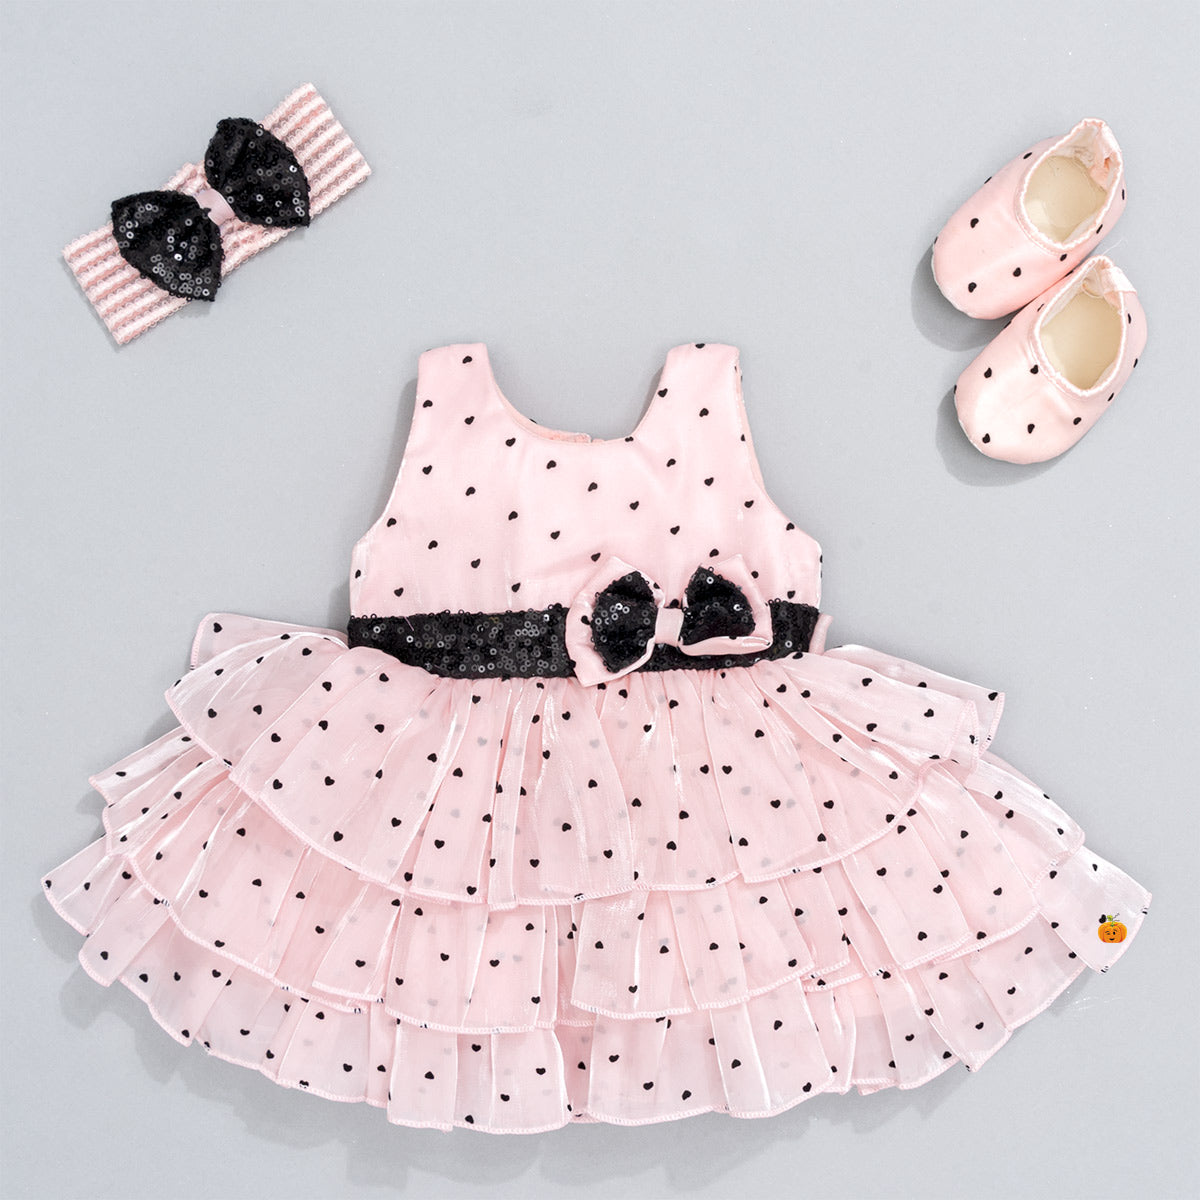 Newborn Cotton Sleeveless Dress 12008 Online, Little Sudhams